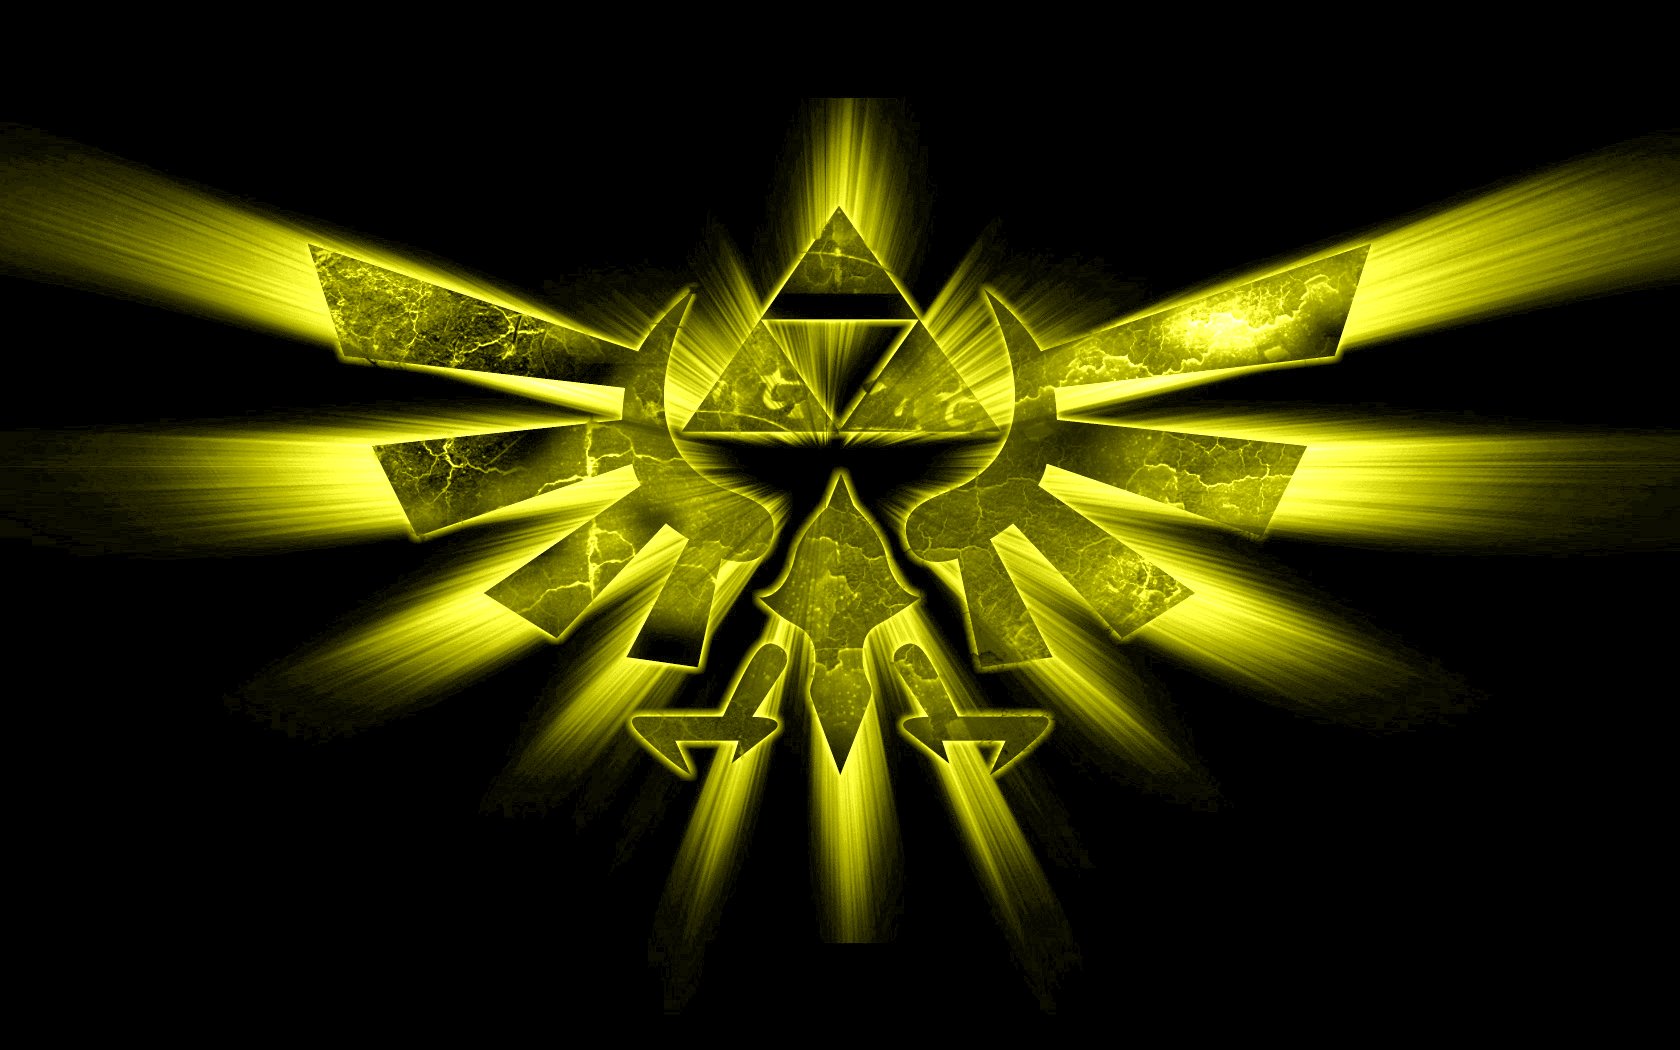 Triforce The Legend of Zelda wallpaper 1680x1050 262336 1680x1050